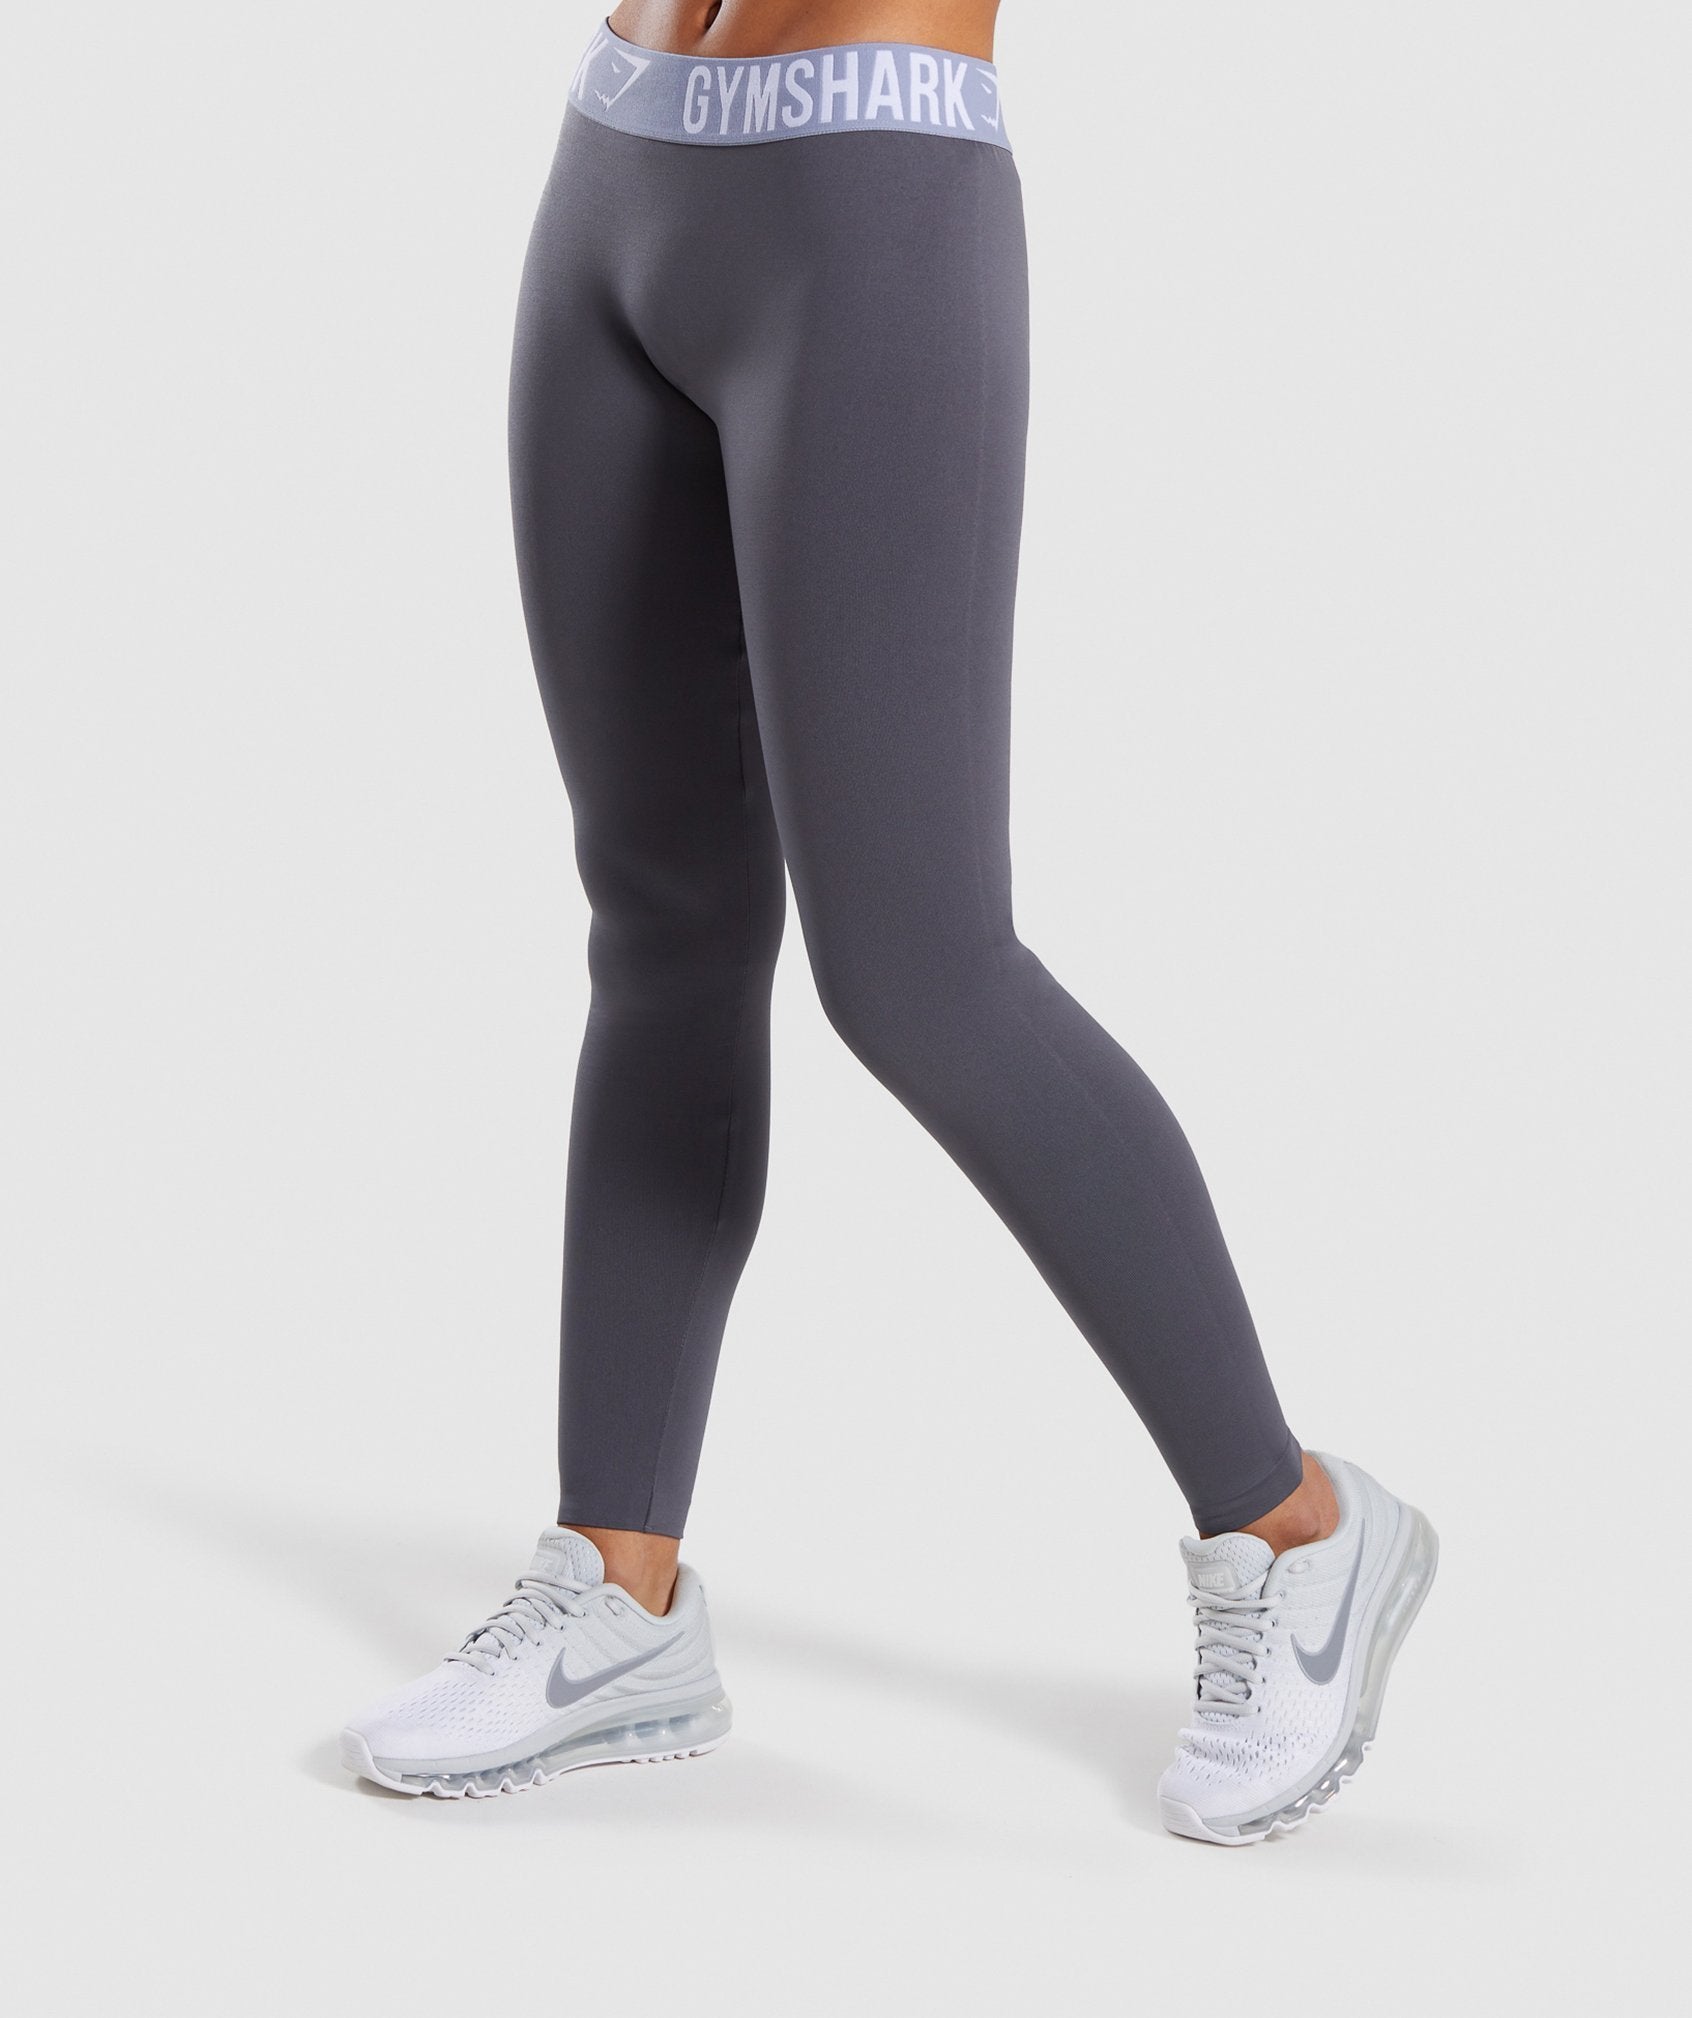 Gymshark Fit Leggings - Grey 